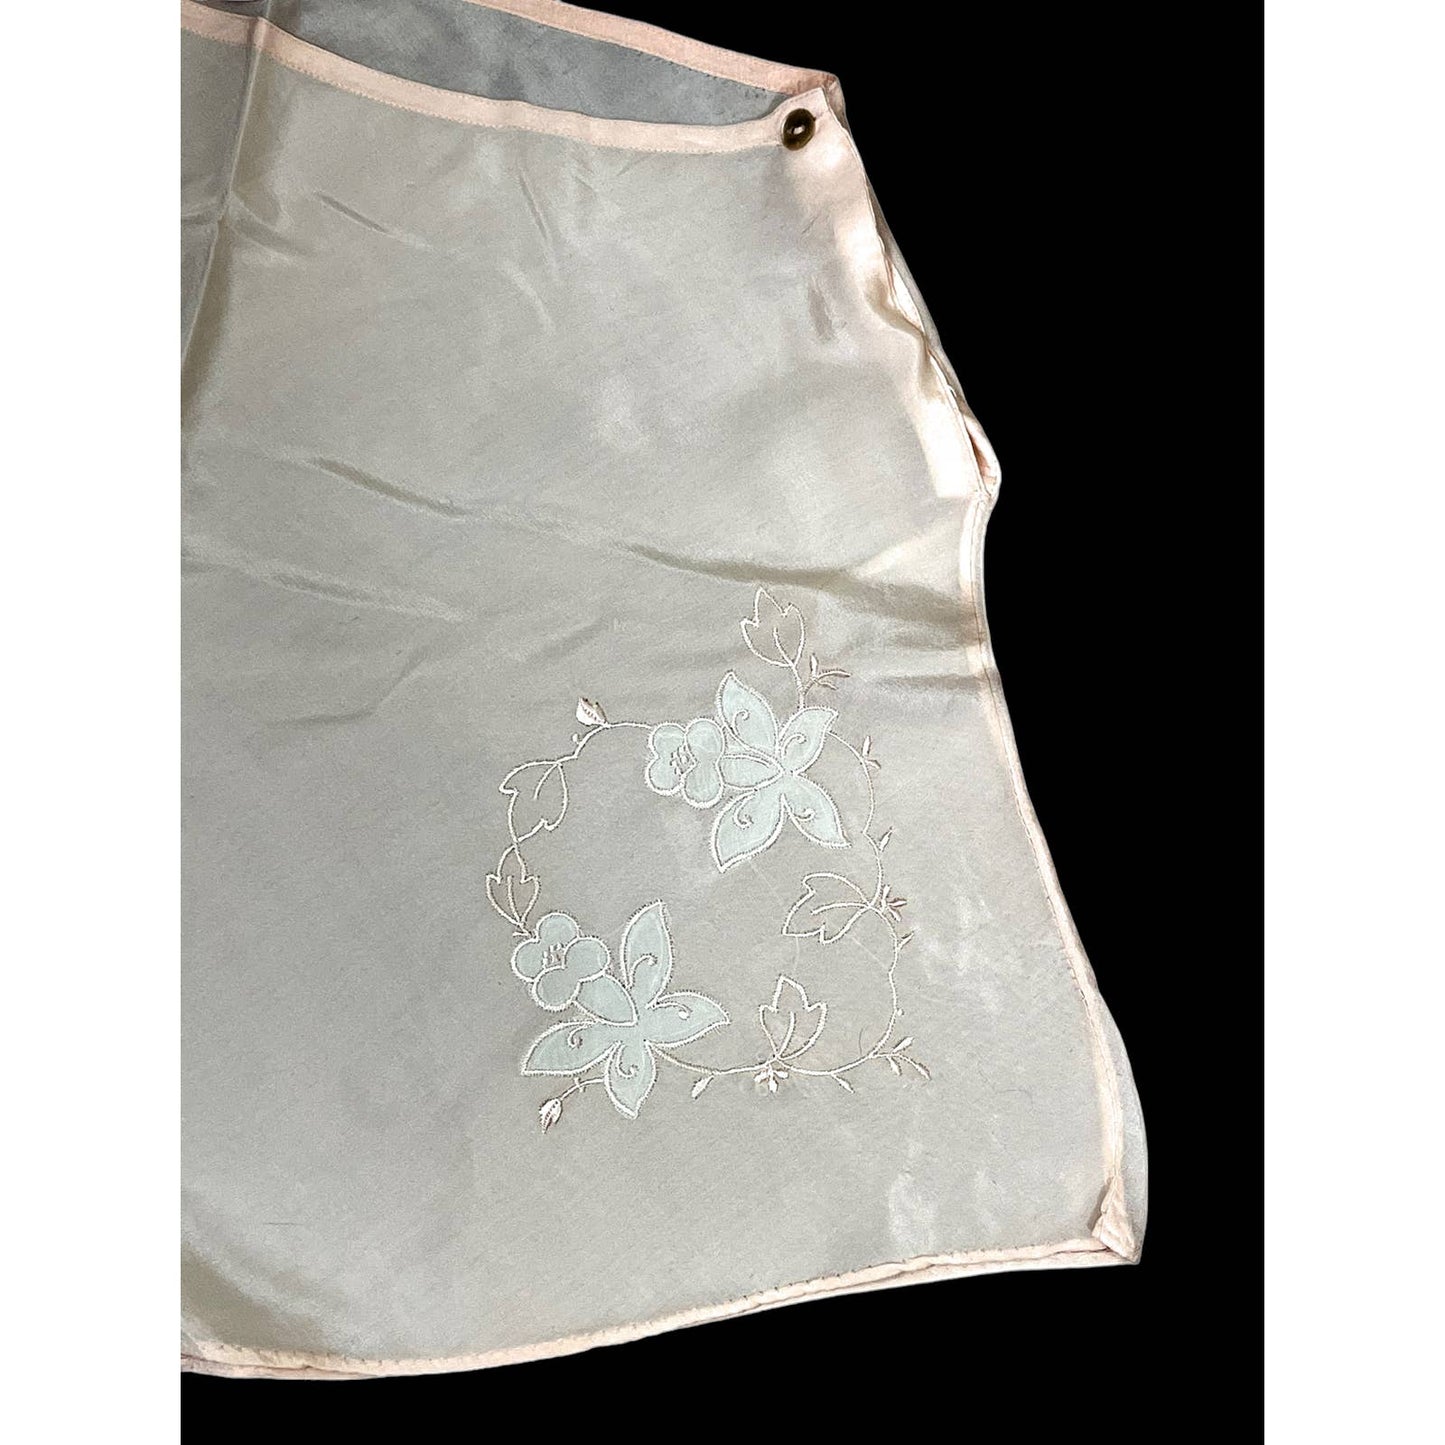 unknownVintage Womens Tap Pants Embroidered Floral Applique Delicate Silk Pale Pink - Black Dog Vintage